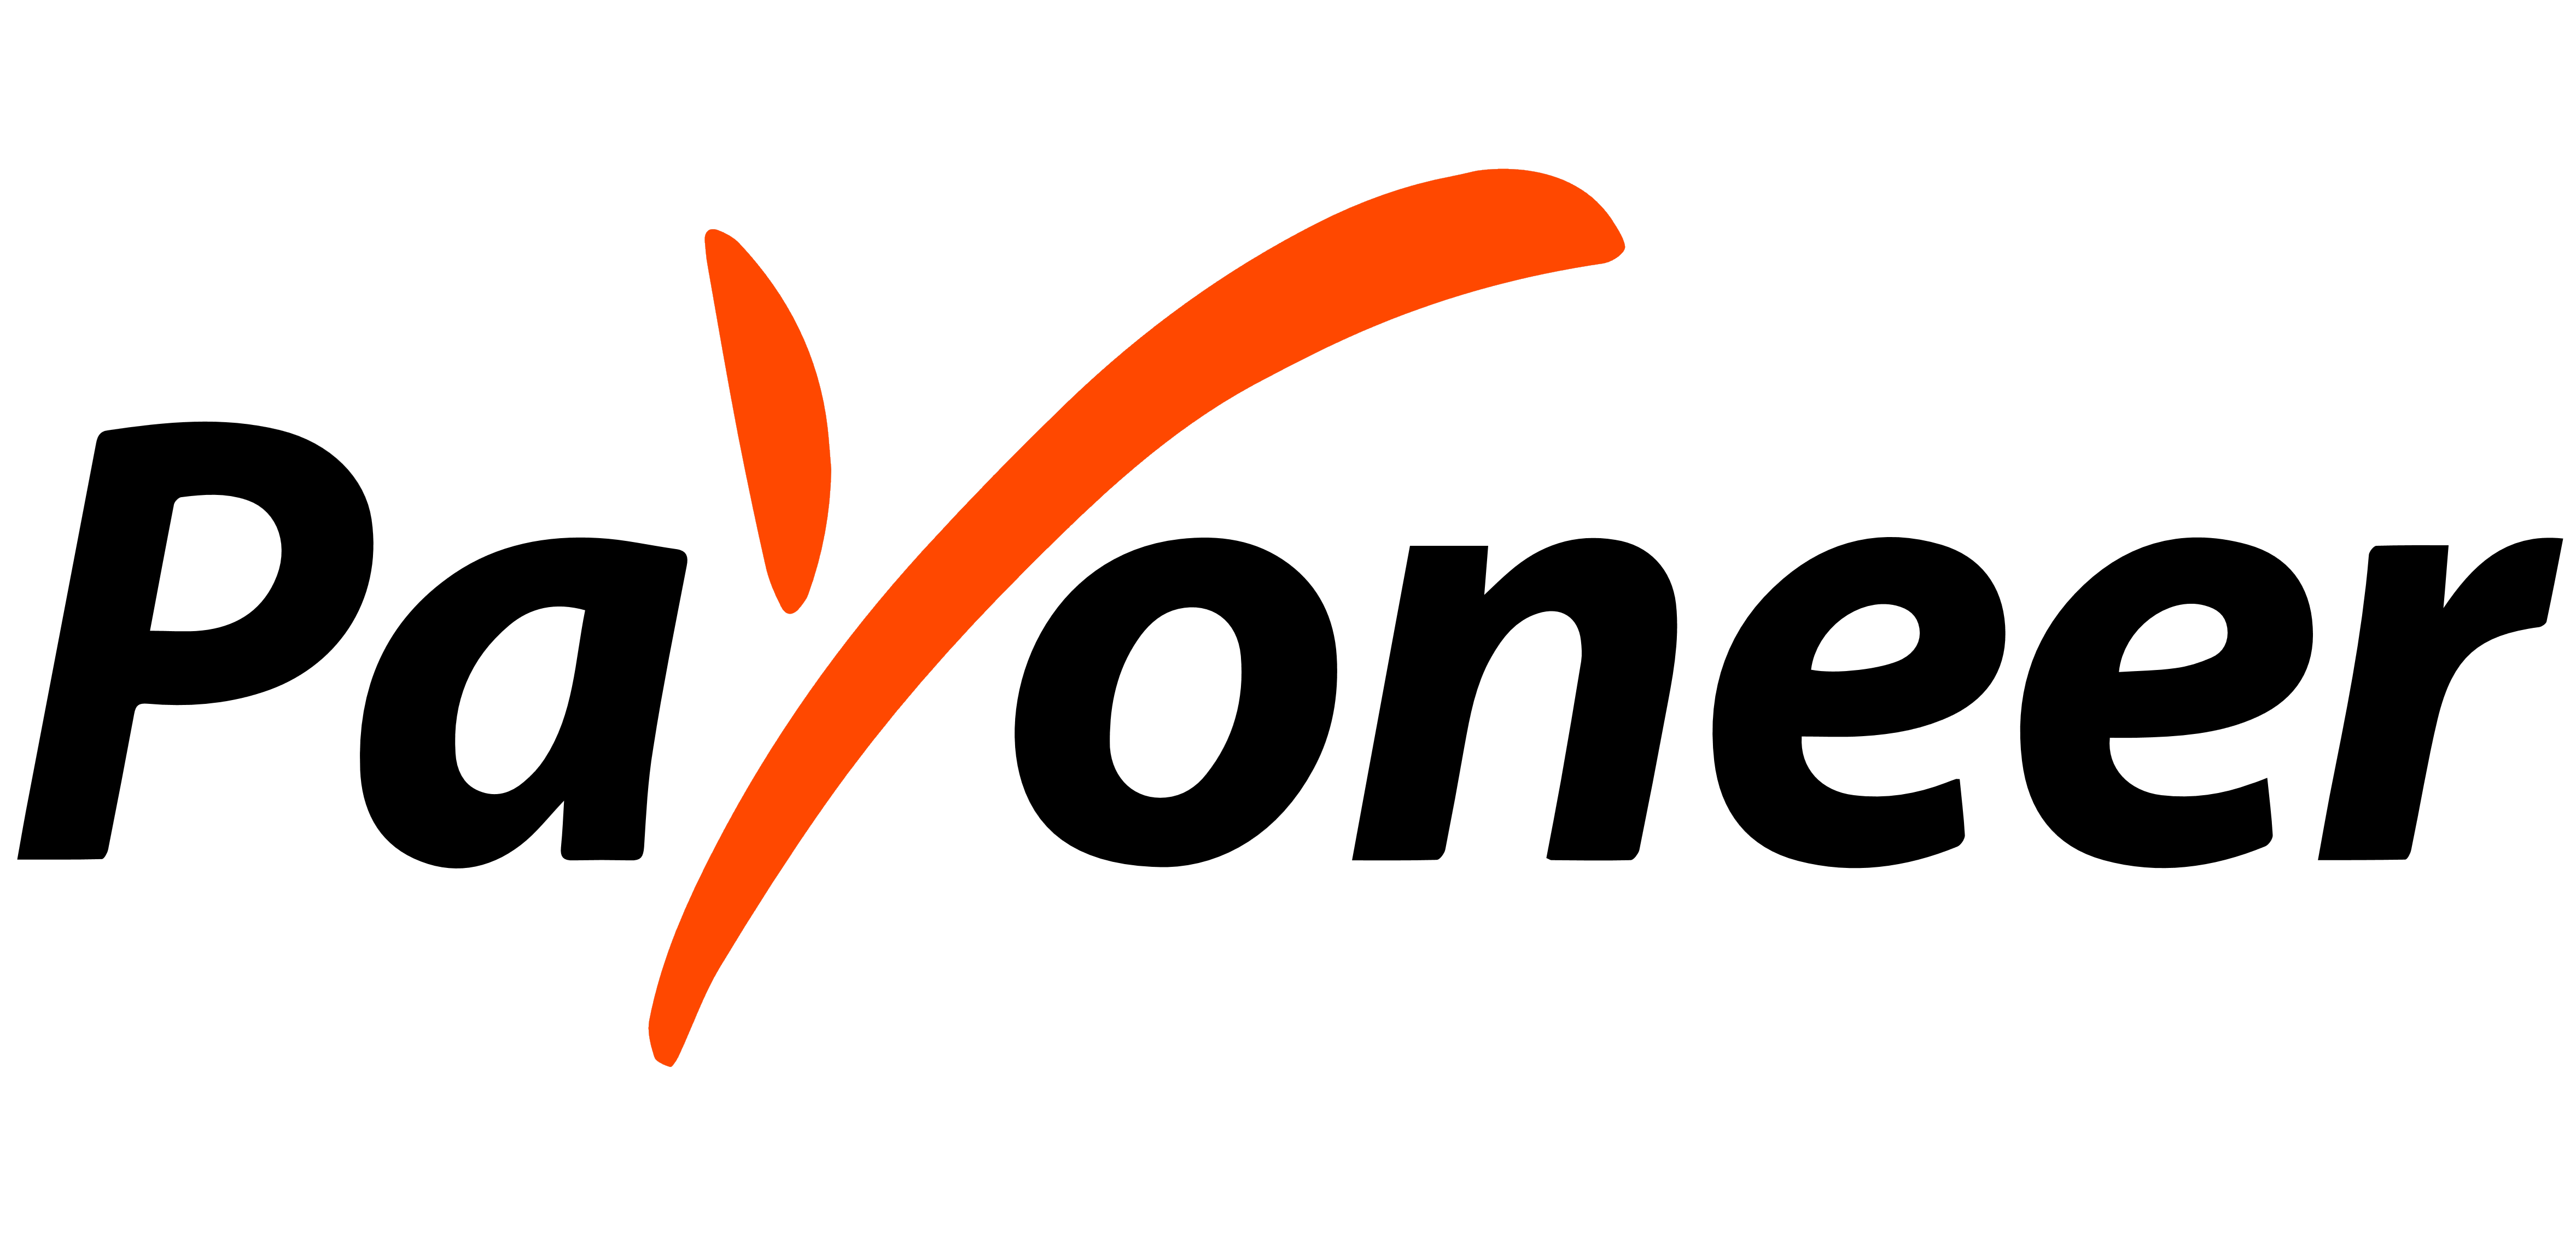 Payoneer logo, logotype